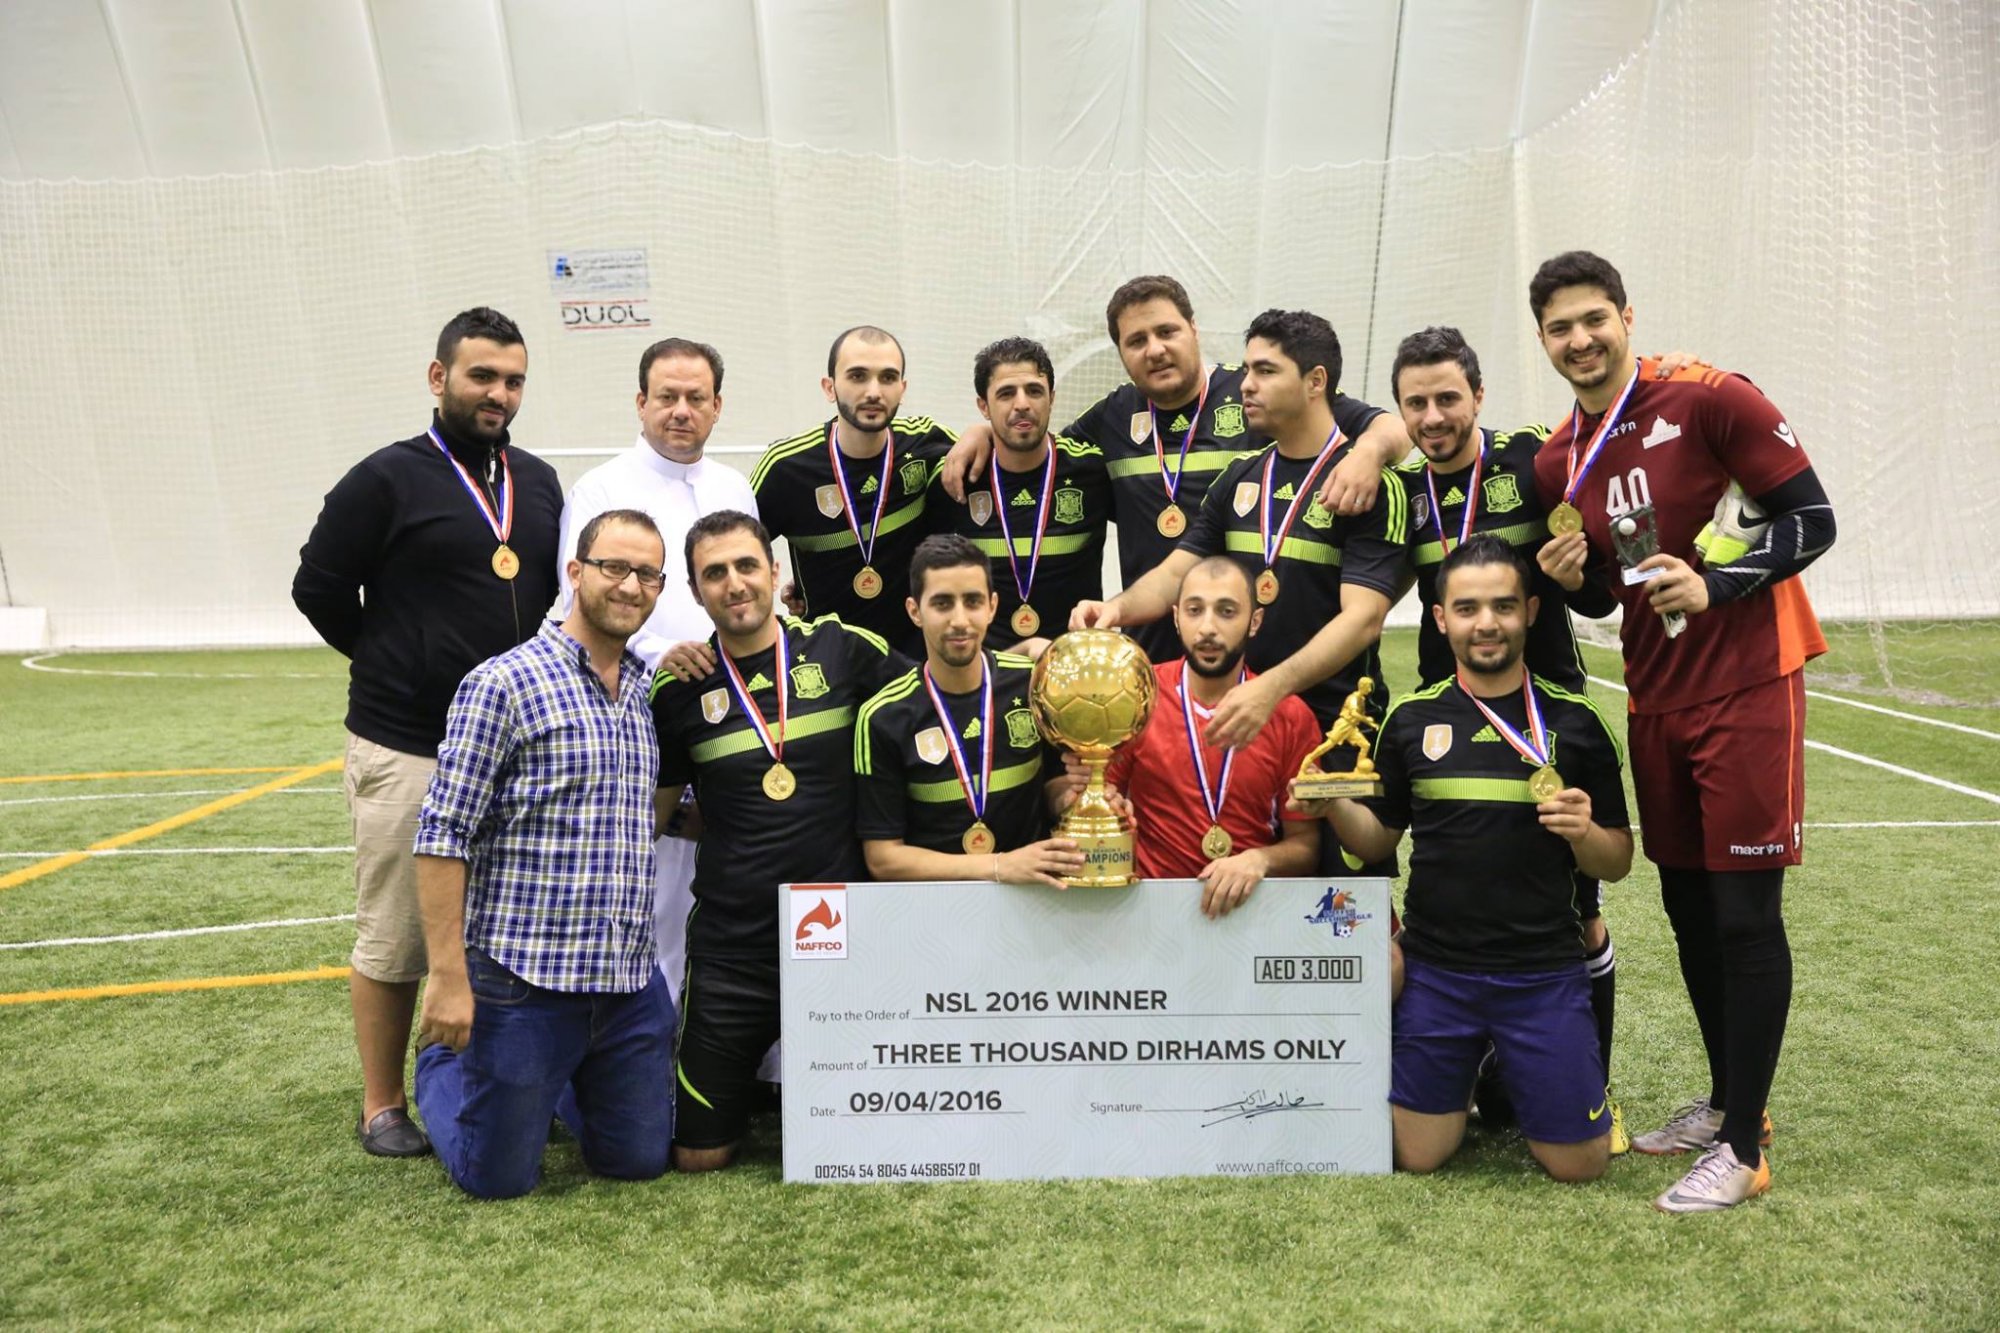 NAFFCO held its NAFFCO Soccer League Season 2 